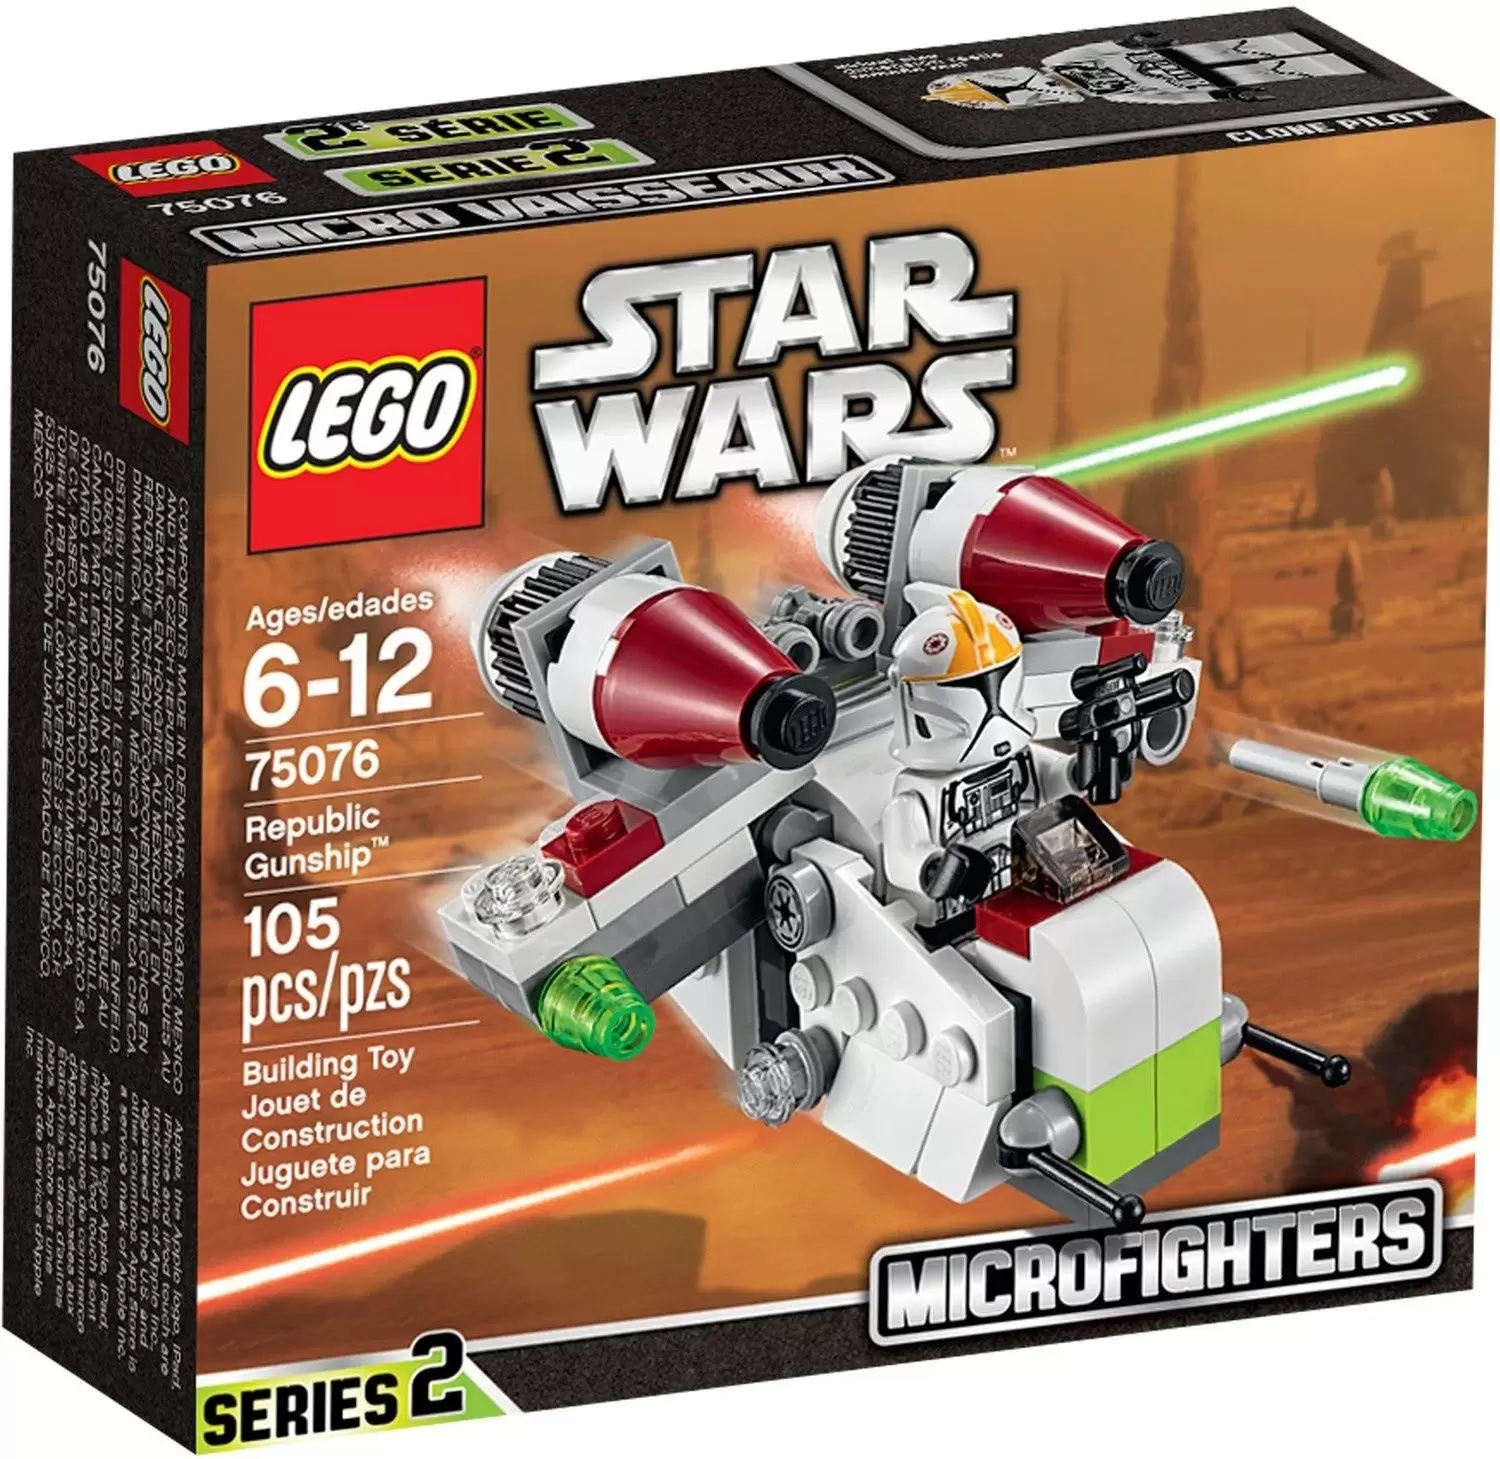 LEGO Star Wars - Republic Gunship (Microfighters)